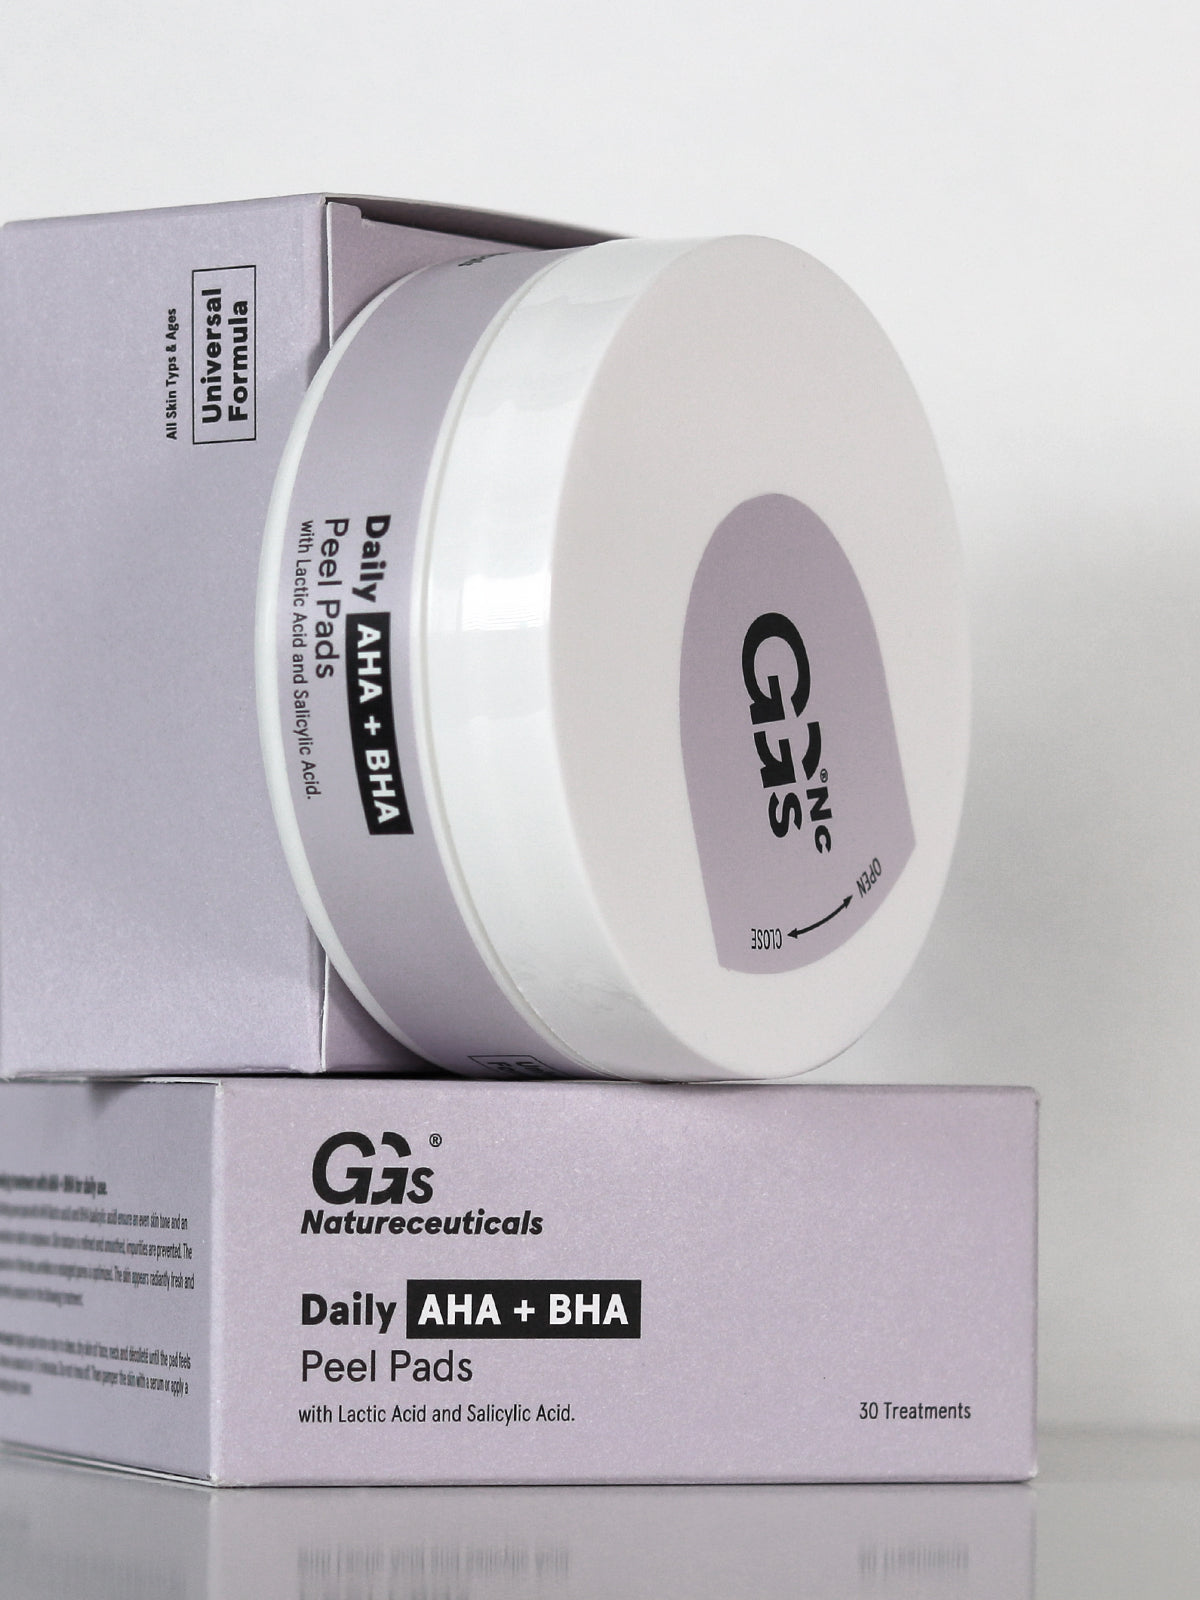 Daily AHA + BHA Peel Pads - Peeling für strahlende Haut | GGs Natureceuticals